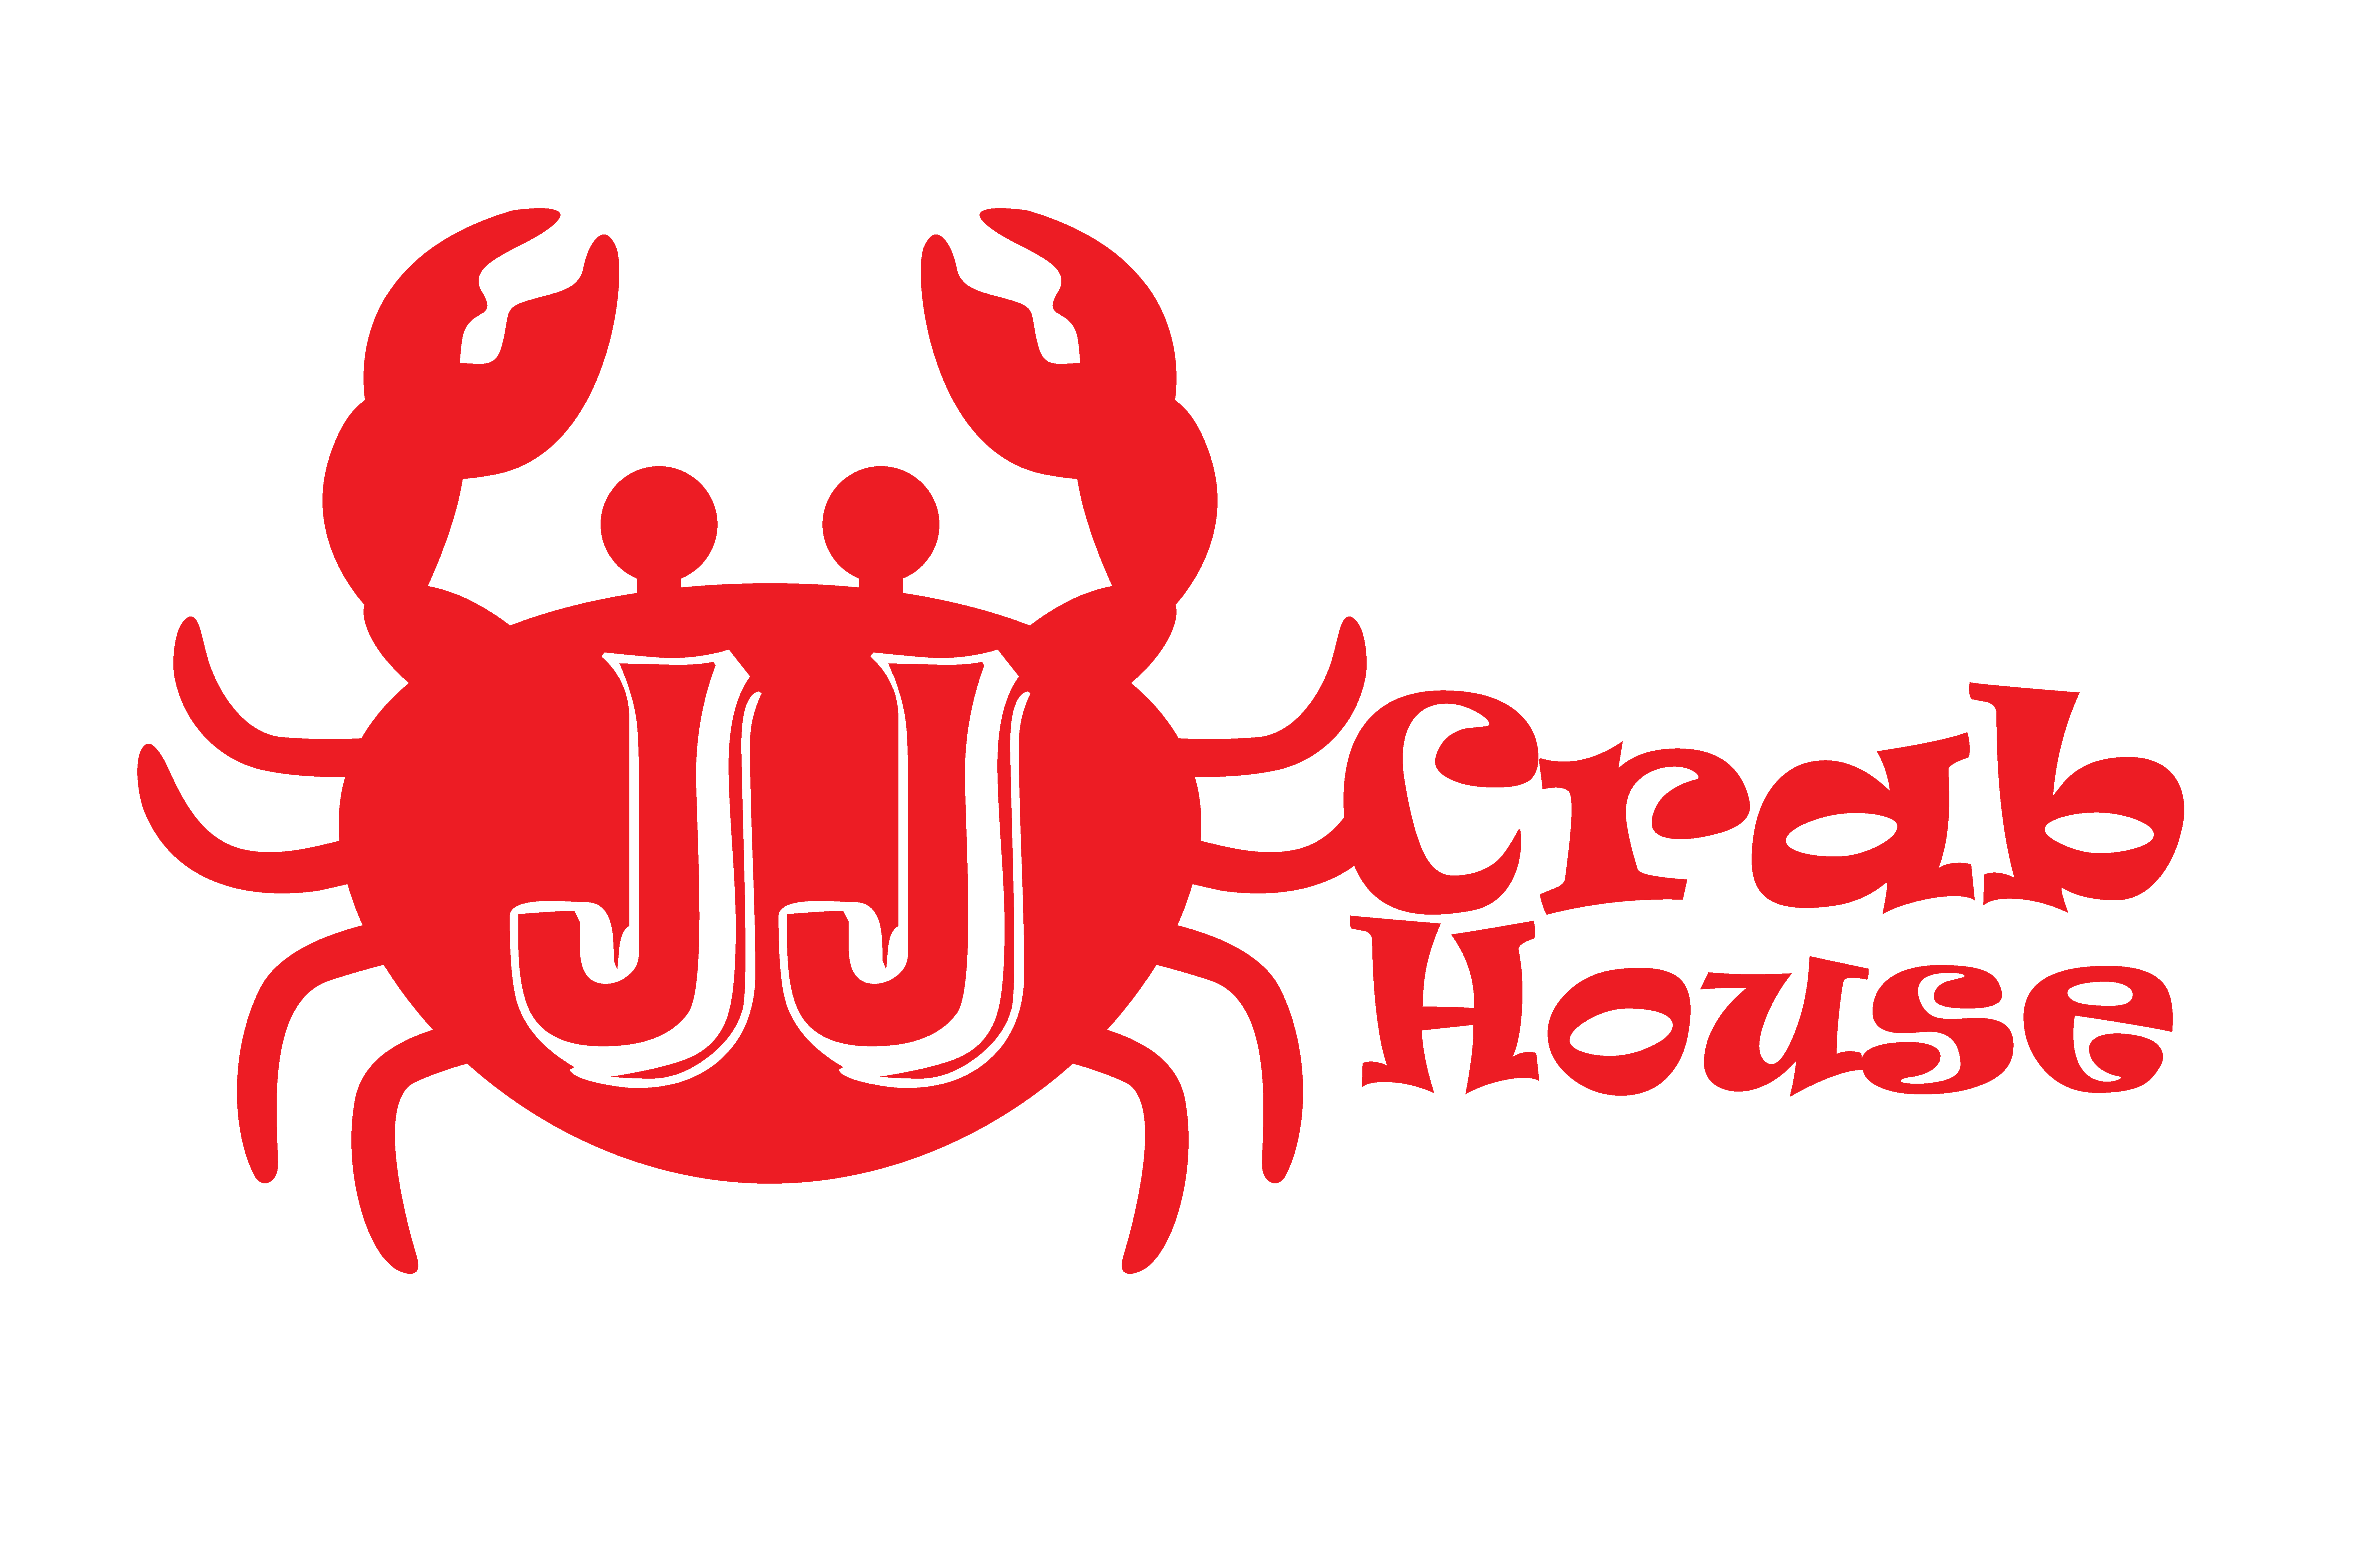 JJ Crab House